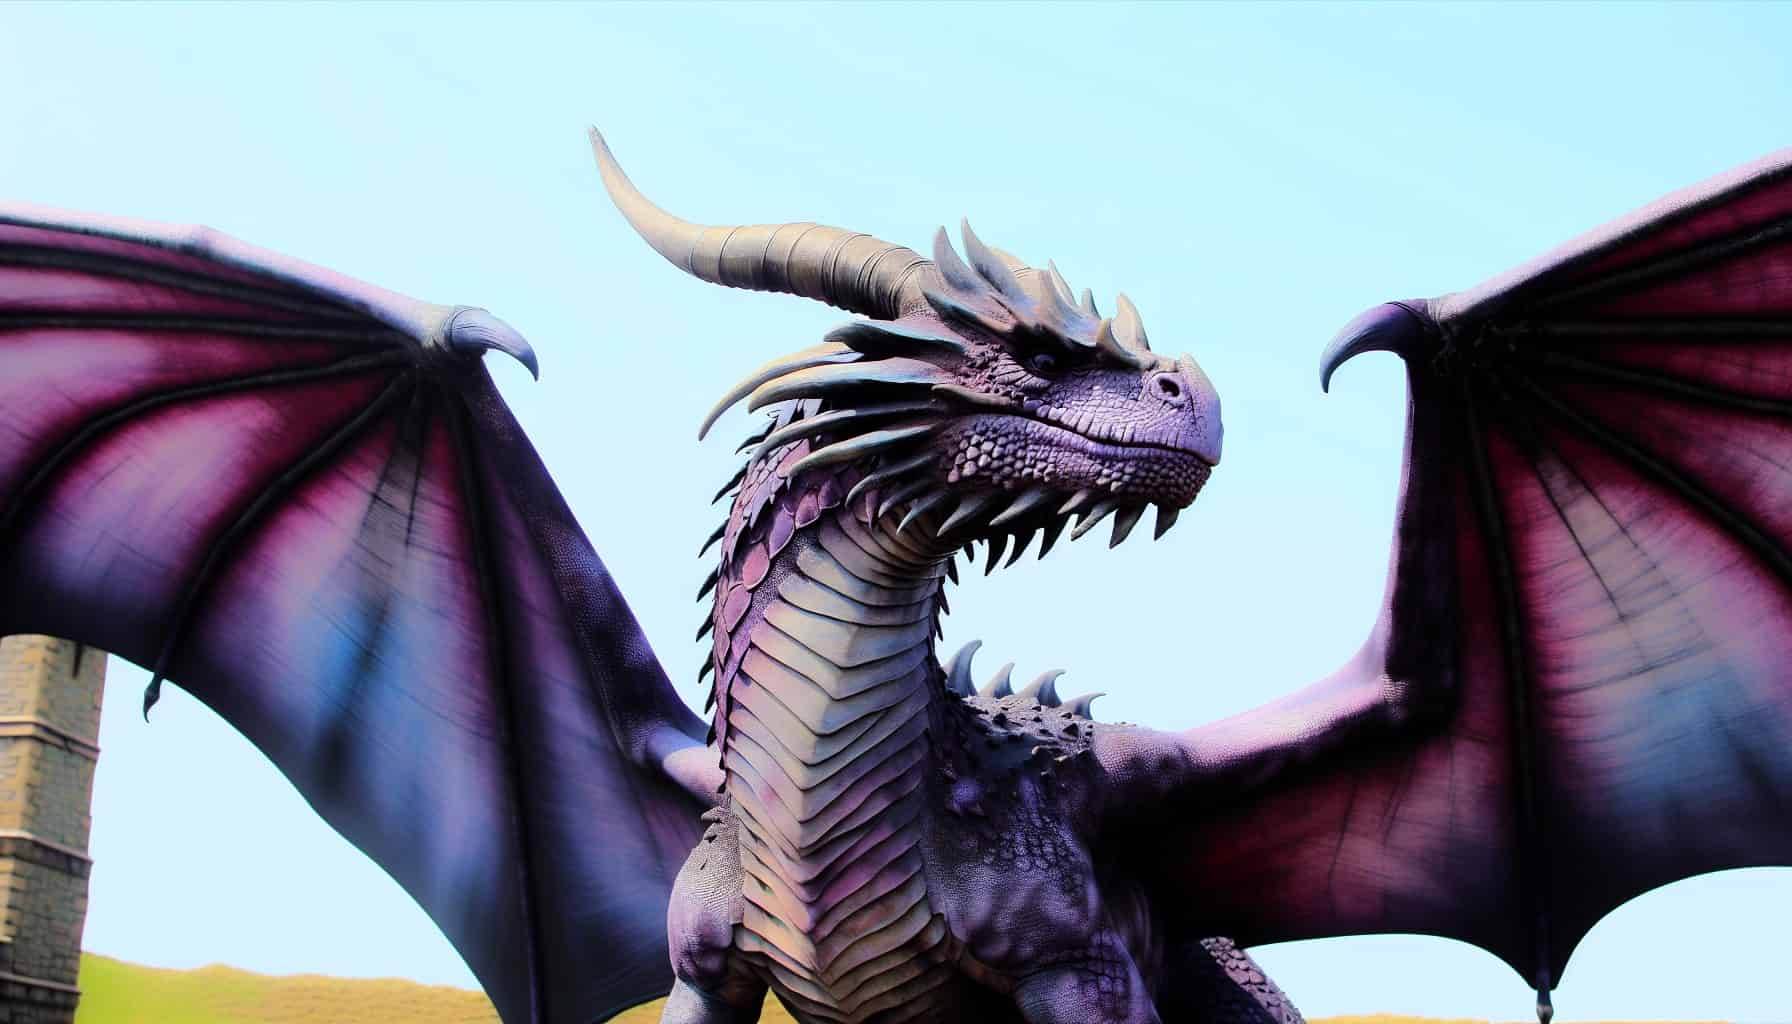 Purple Dragon Spiritual Meaning - A purple dragon outdoors